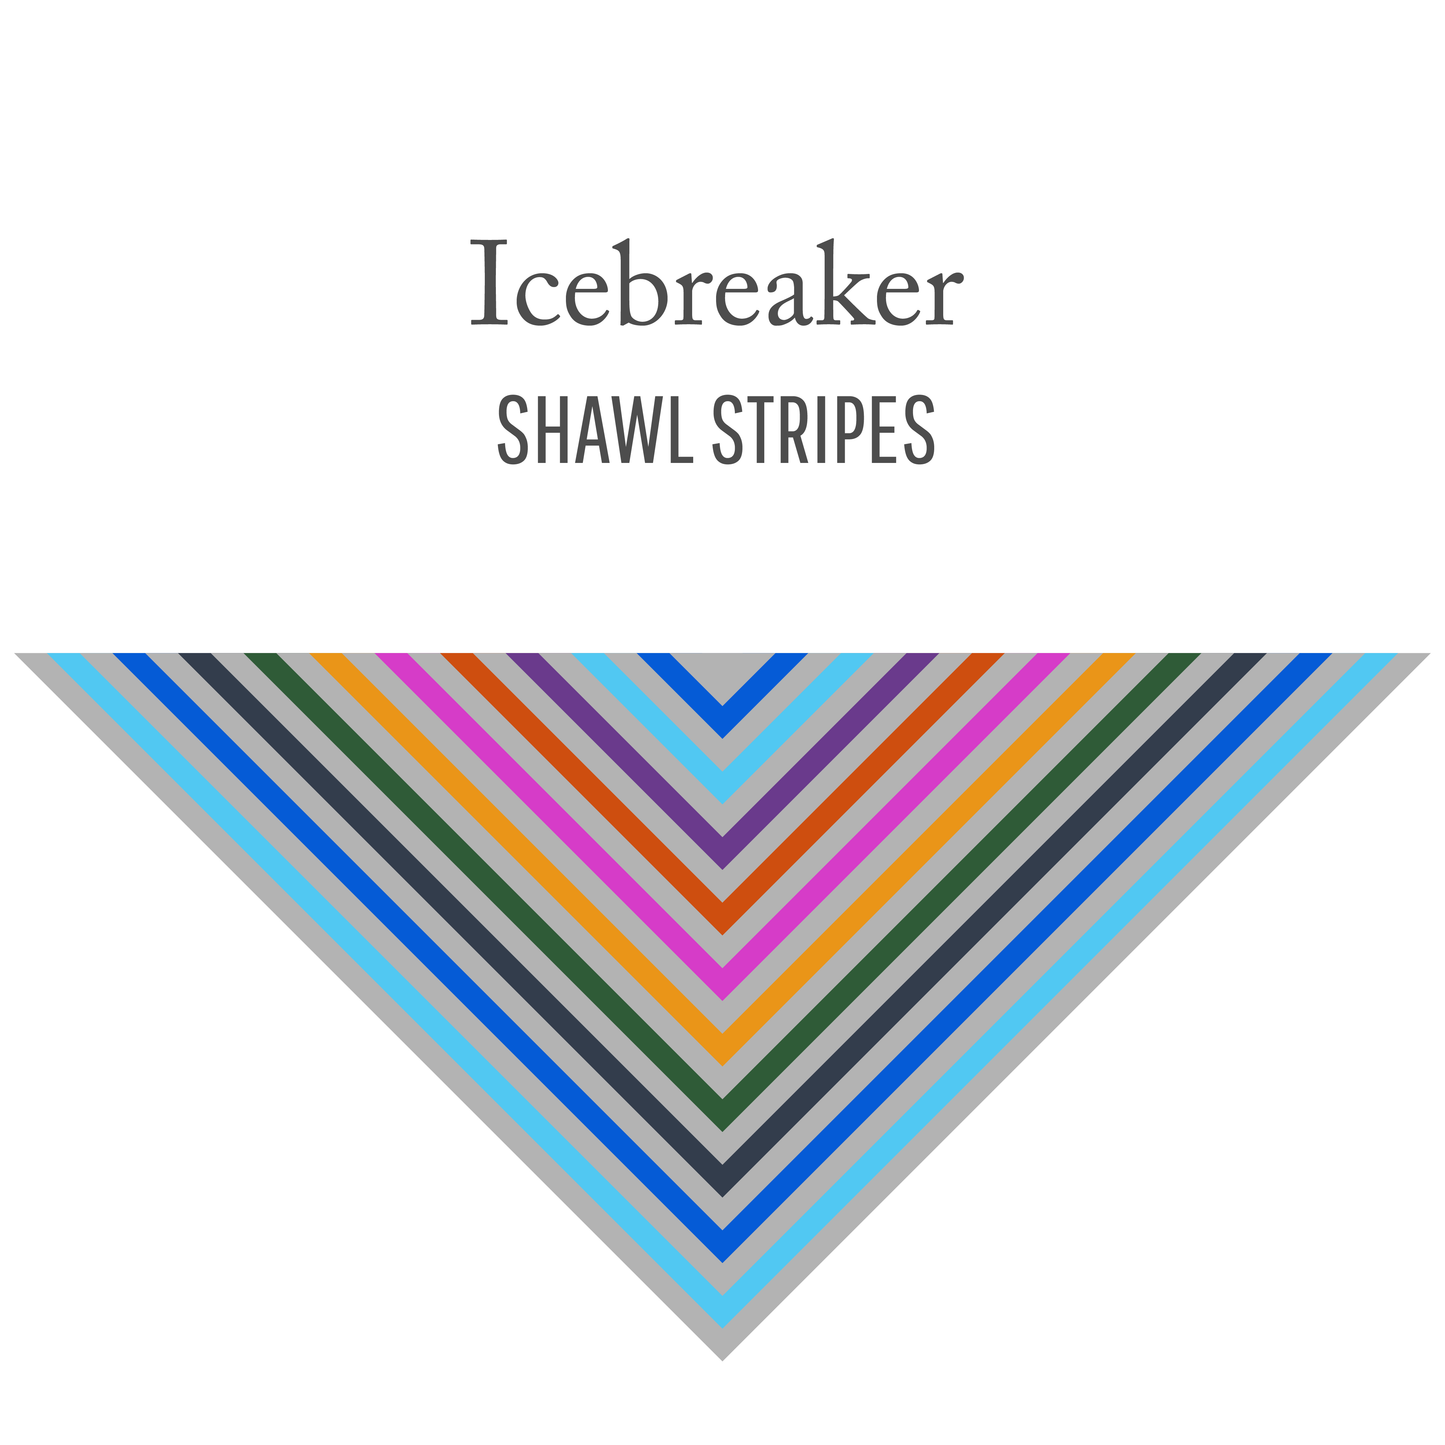 Icebreaker : Shawl